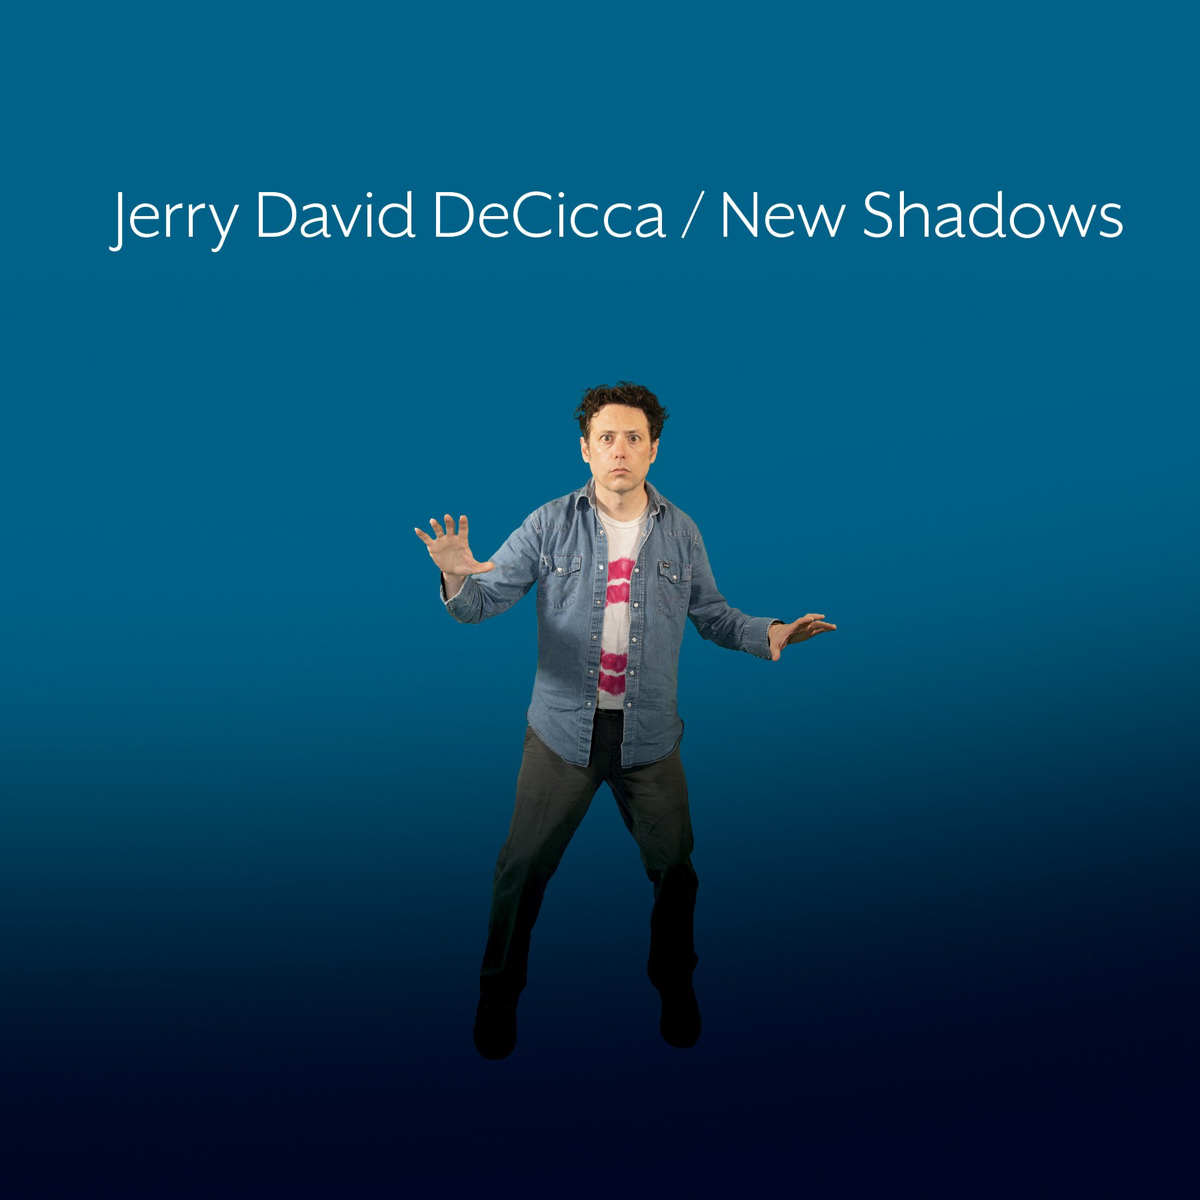 Jerry David DeCicca